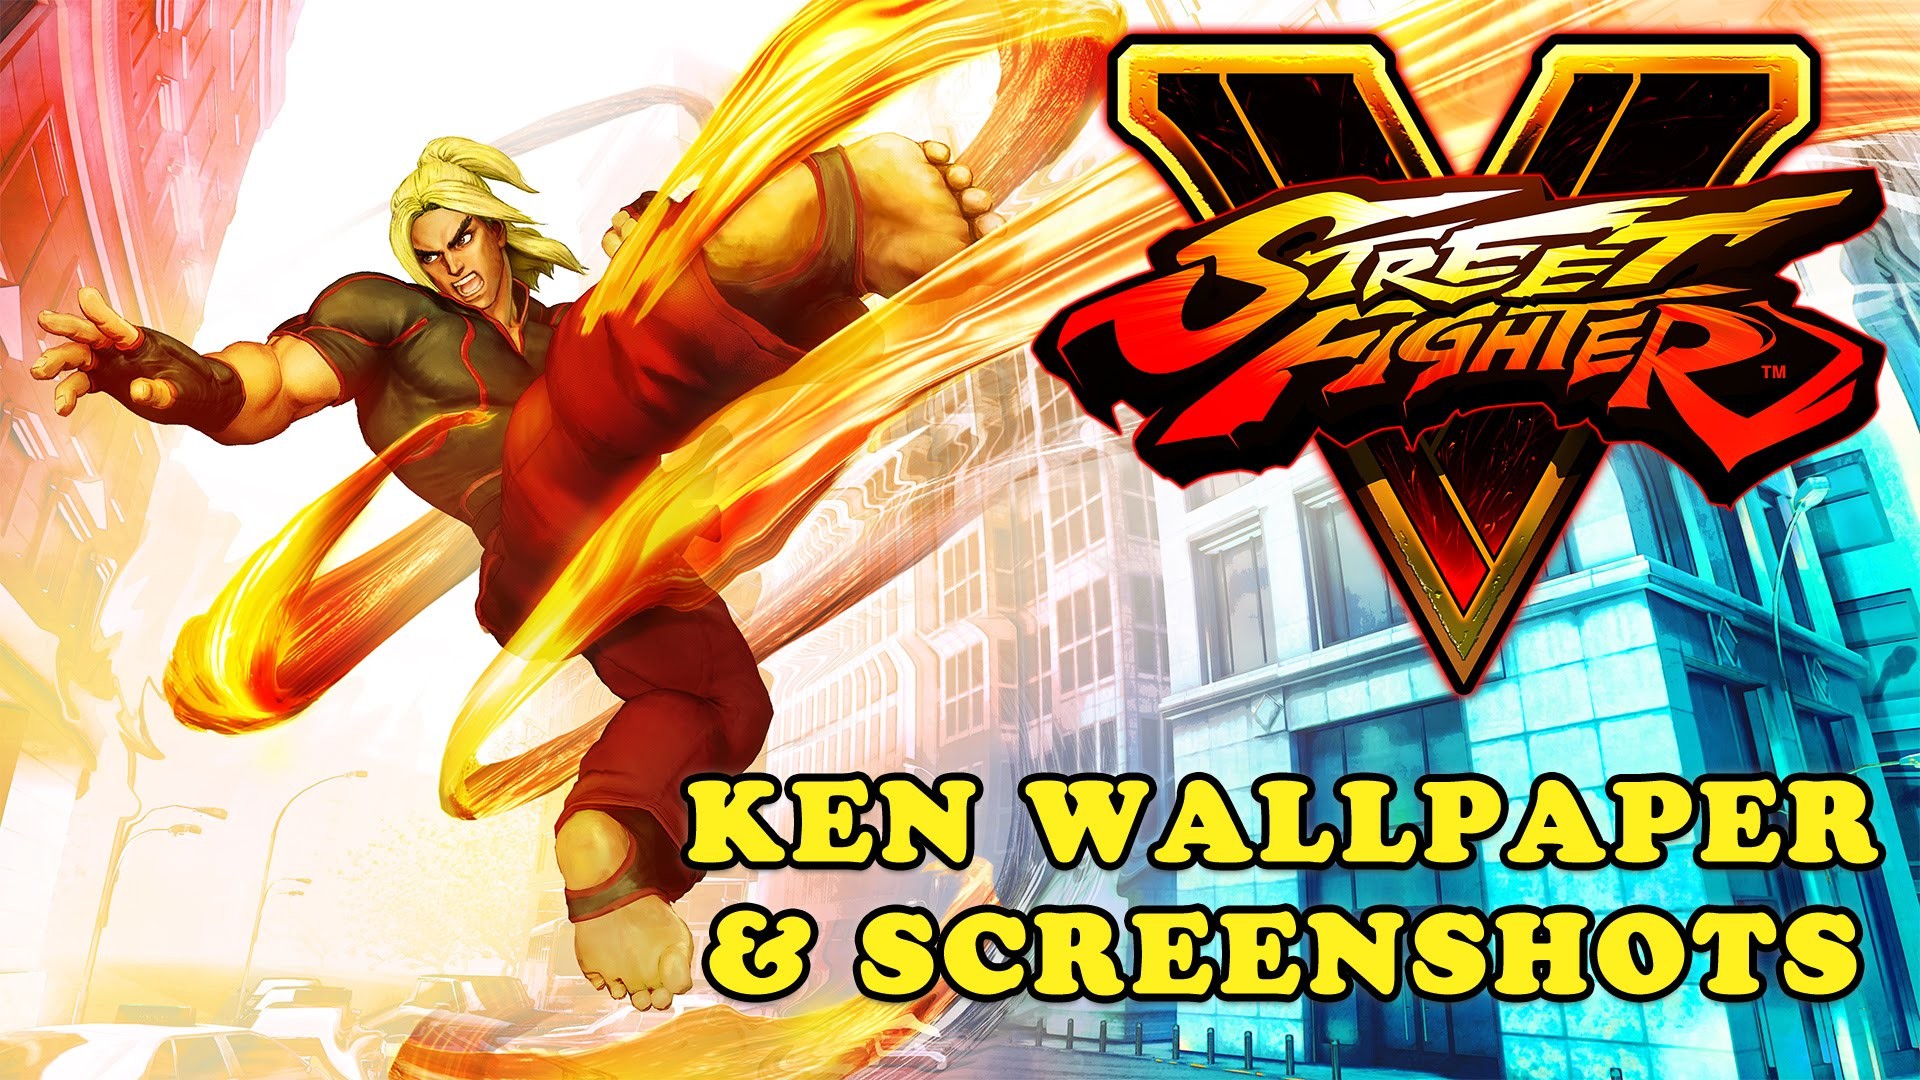 1920x1080 Street Fighter V - Ken Wallpaper and Screenshots (Download Link) - YouTube